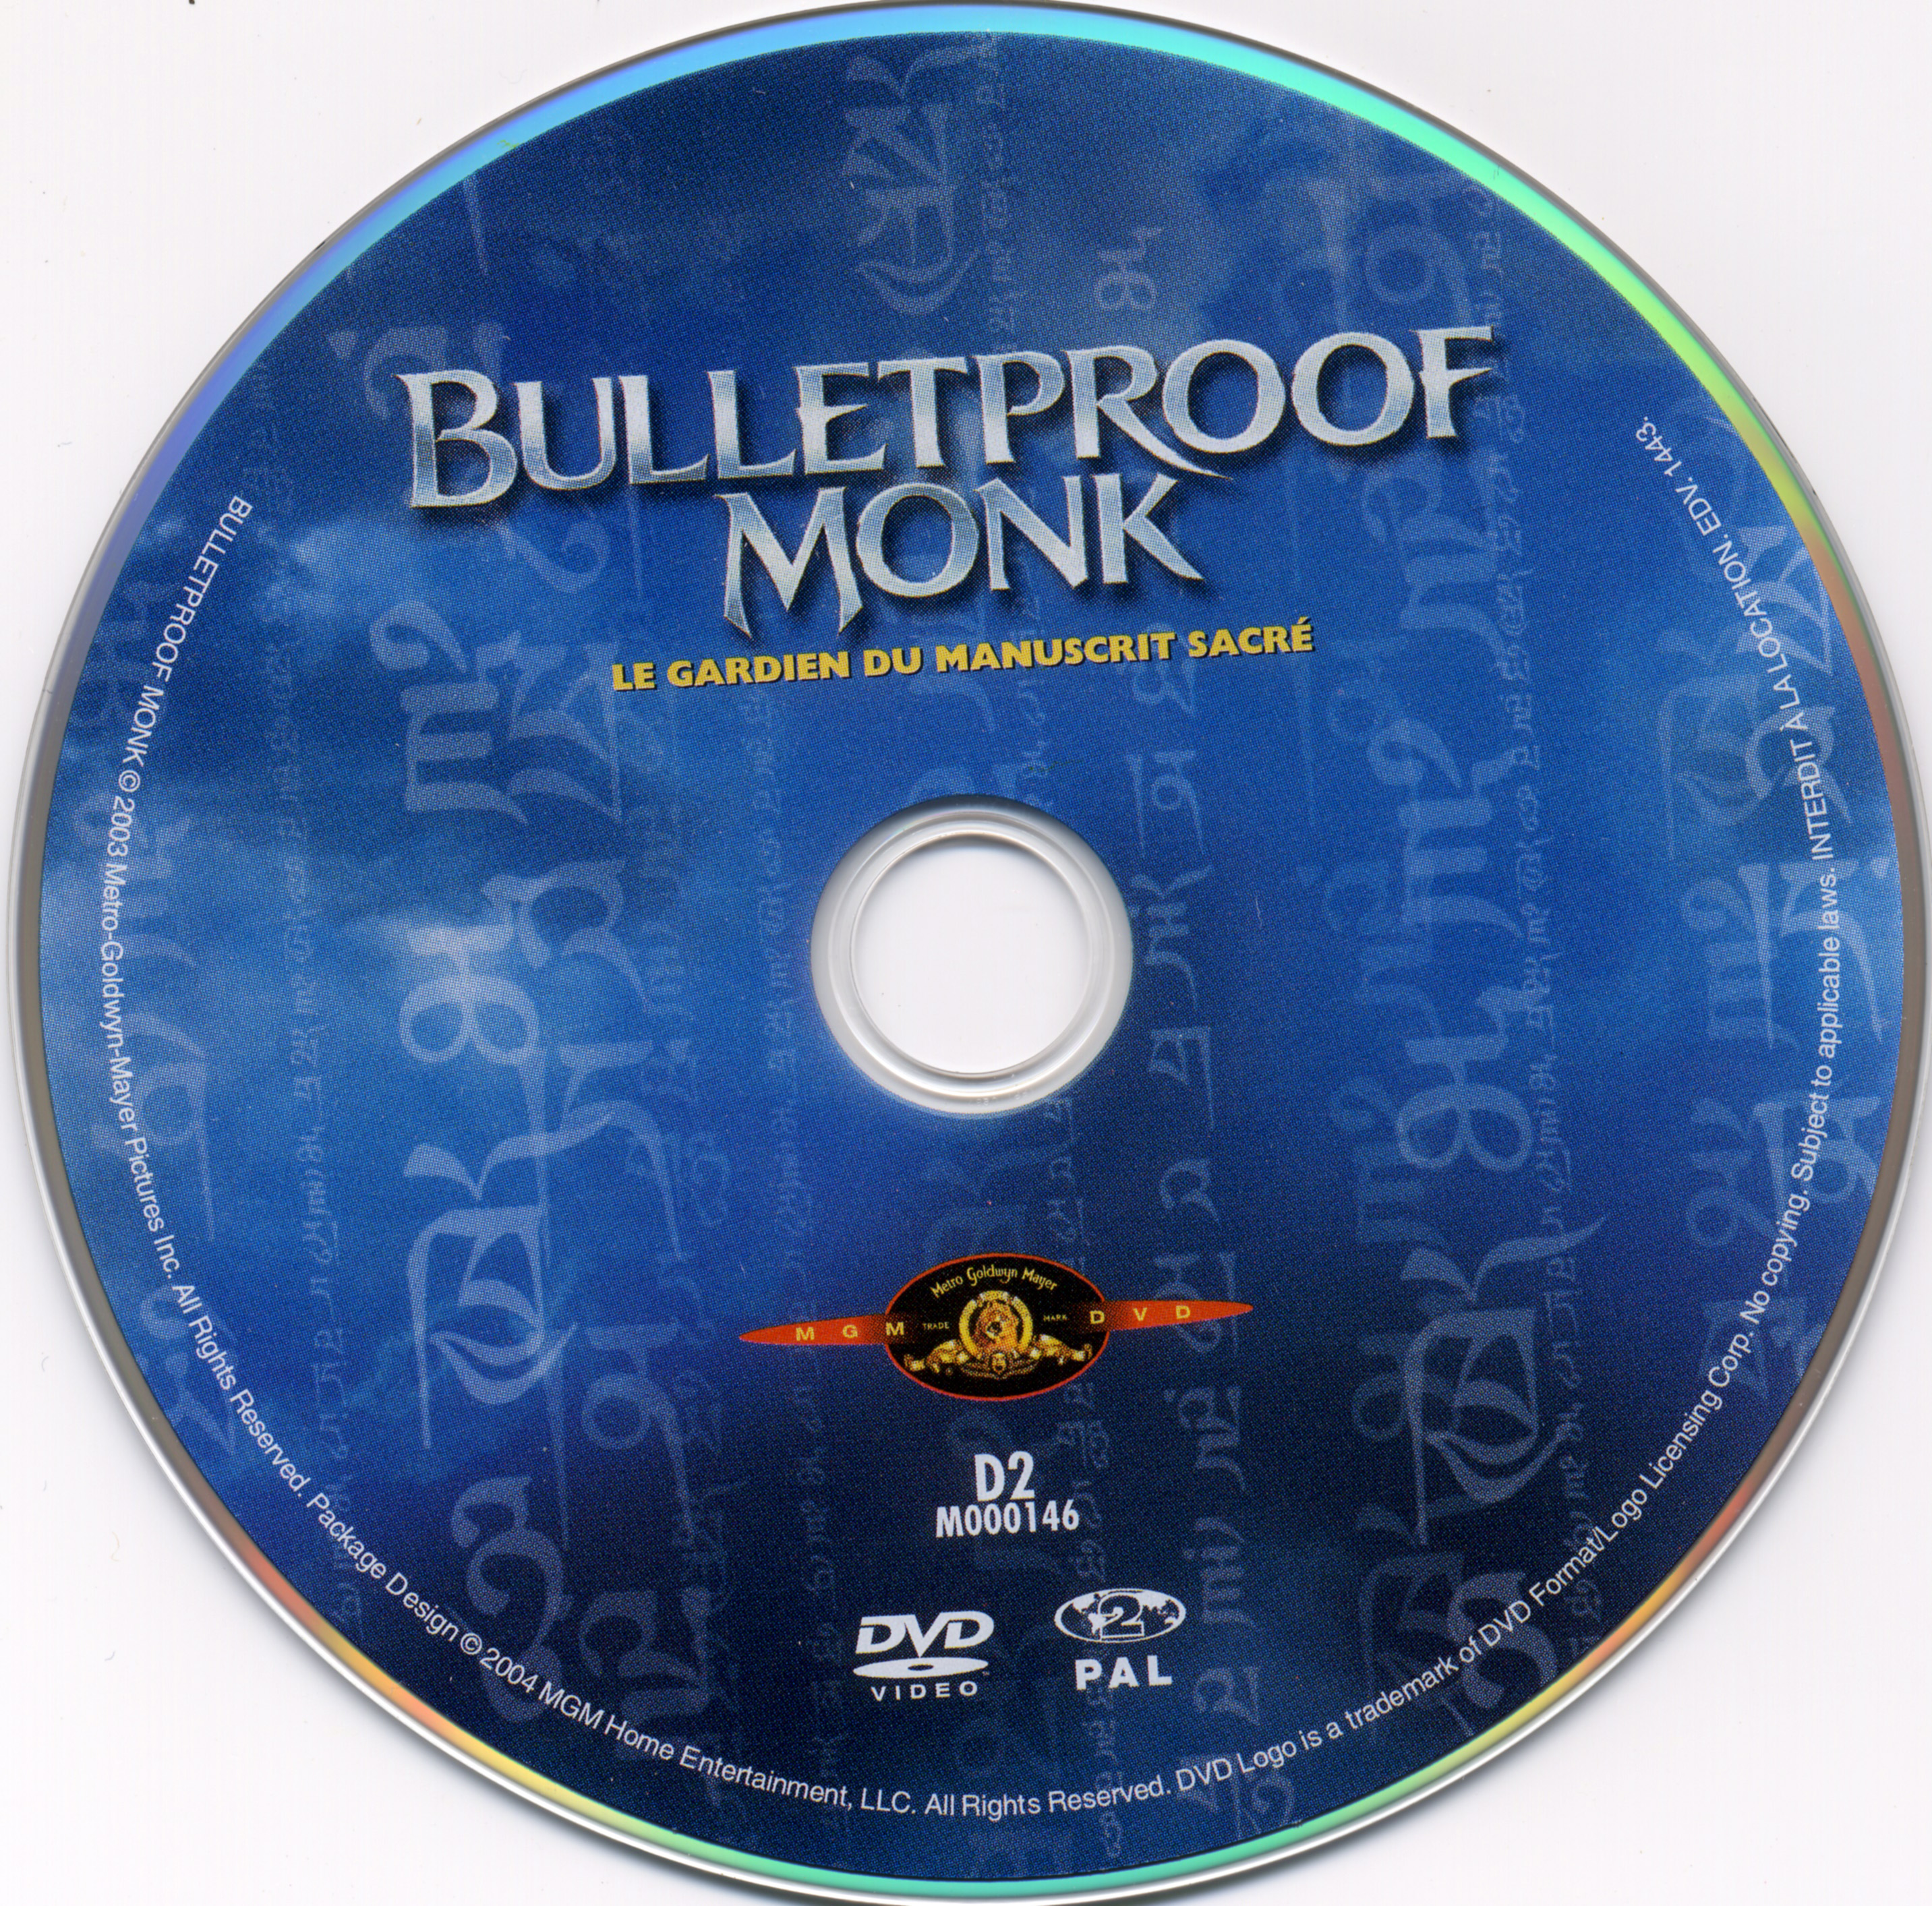 Bulletproof monk